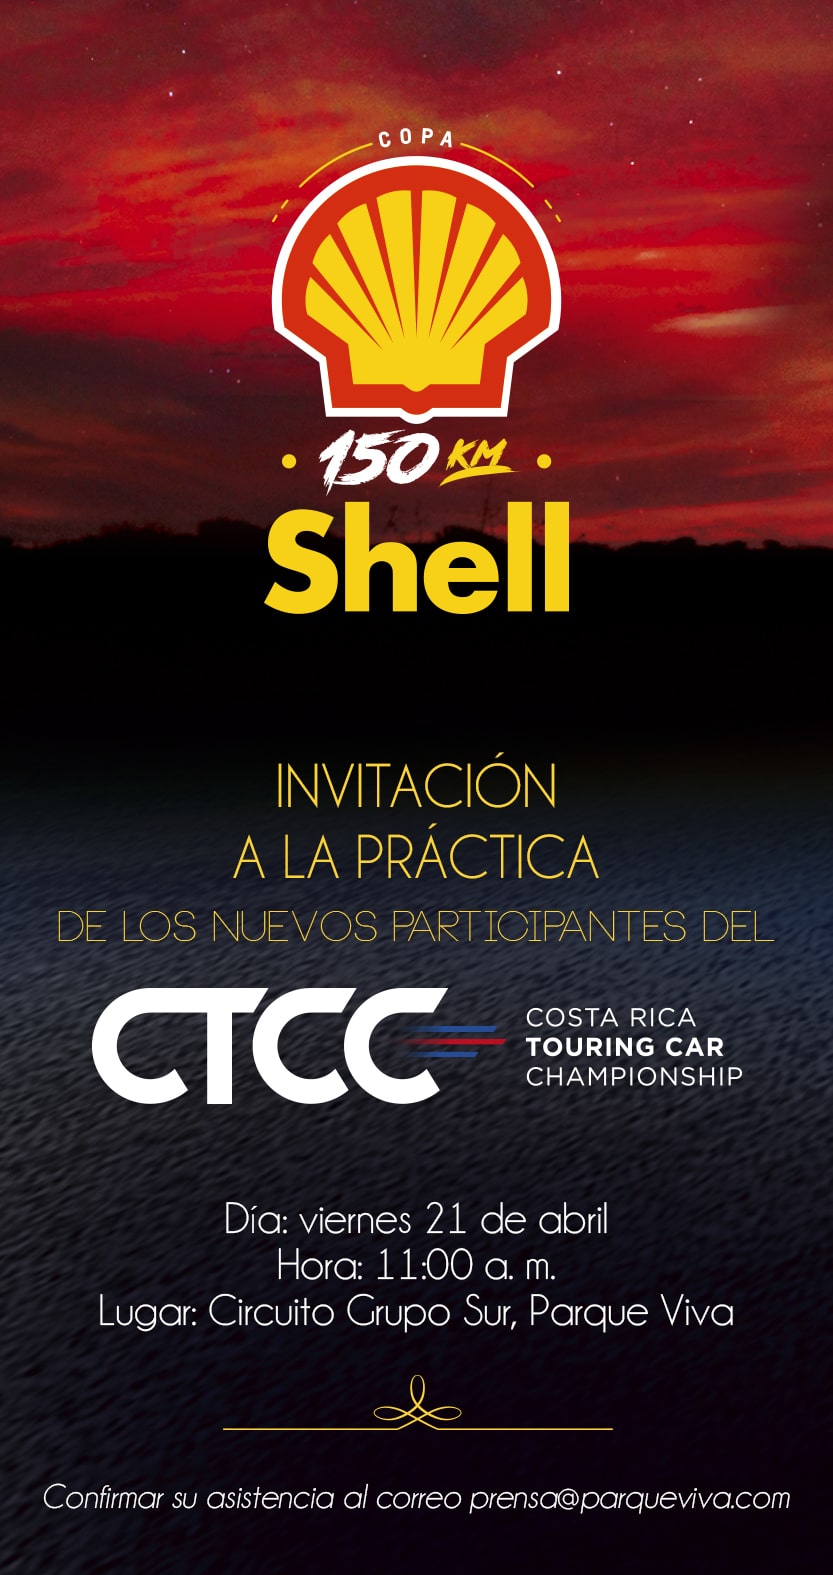 Costa Rica Touring Car Championship